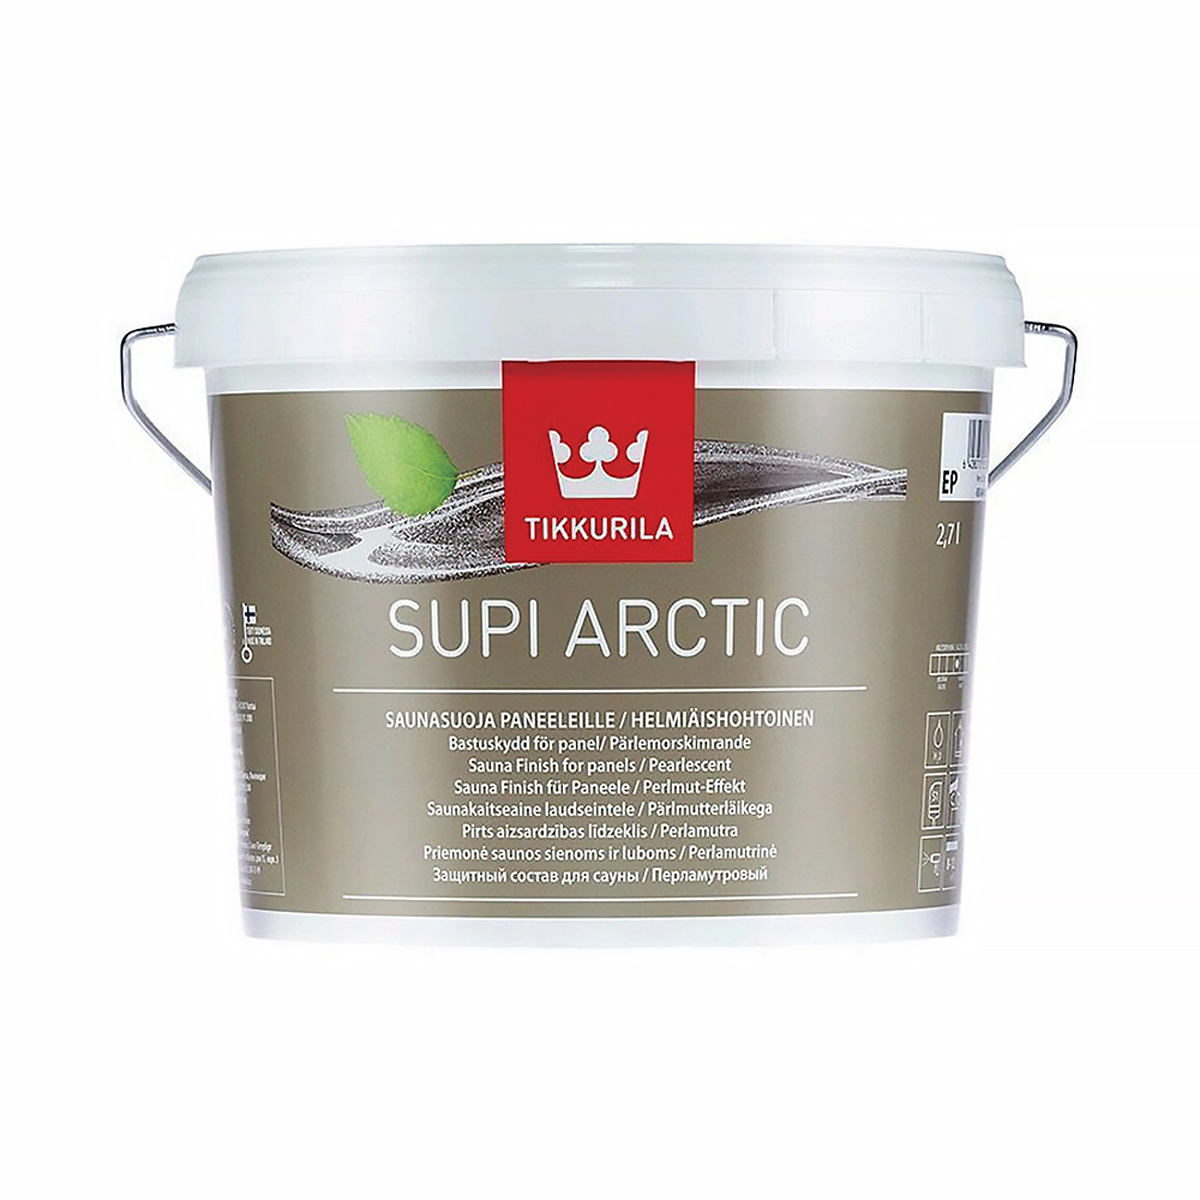 Супи арктик  2,7 л  (1)  защитный перламутр. состав для саун "тиккурила"